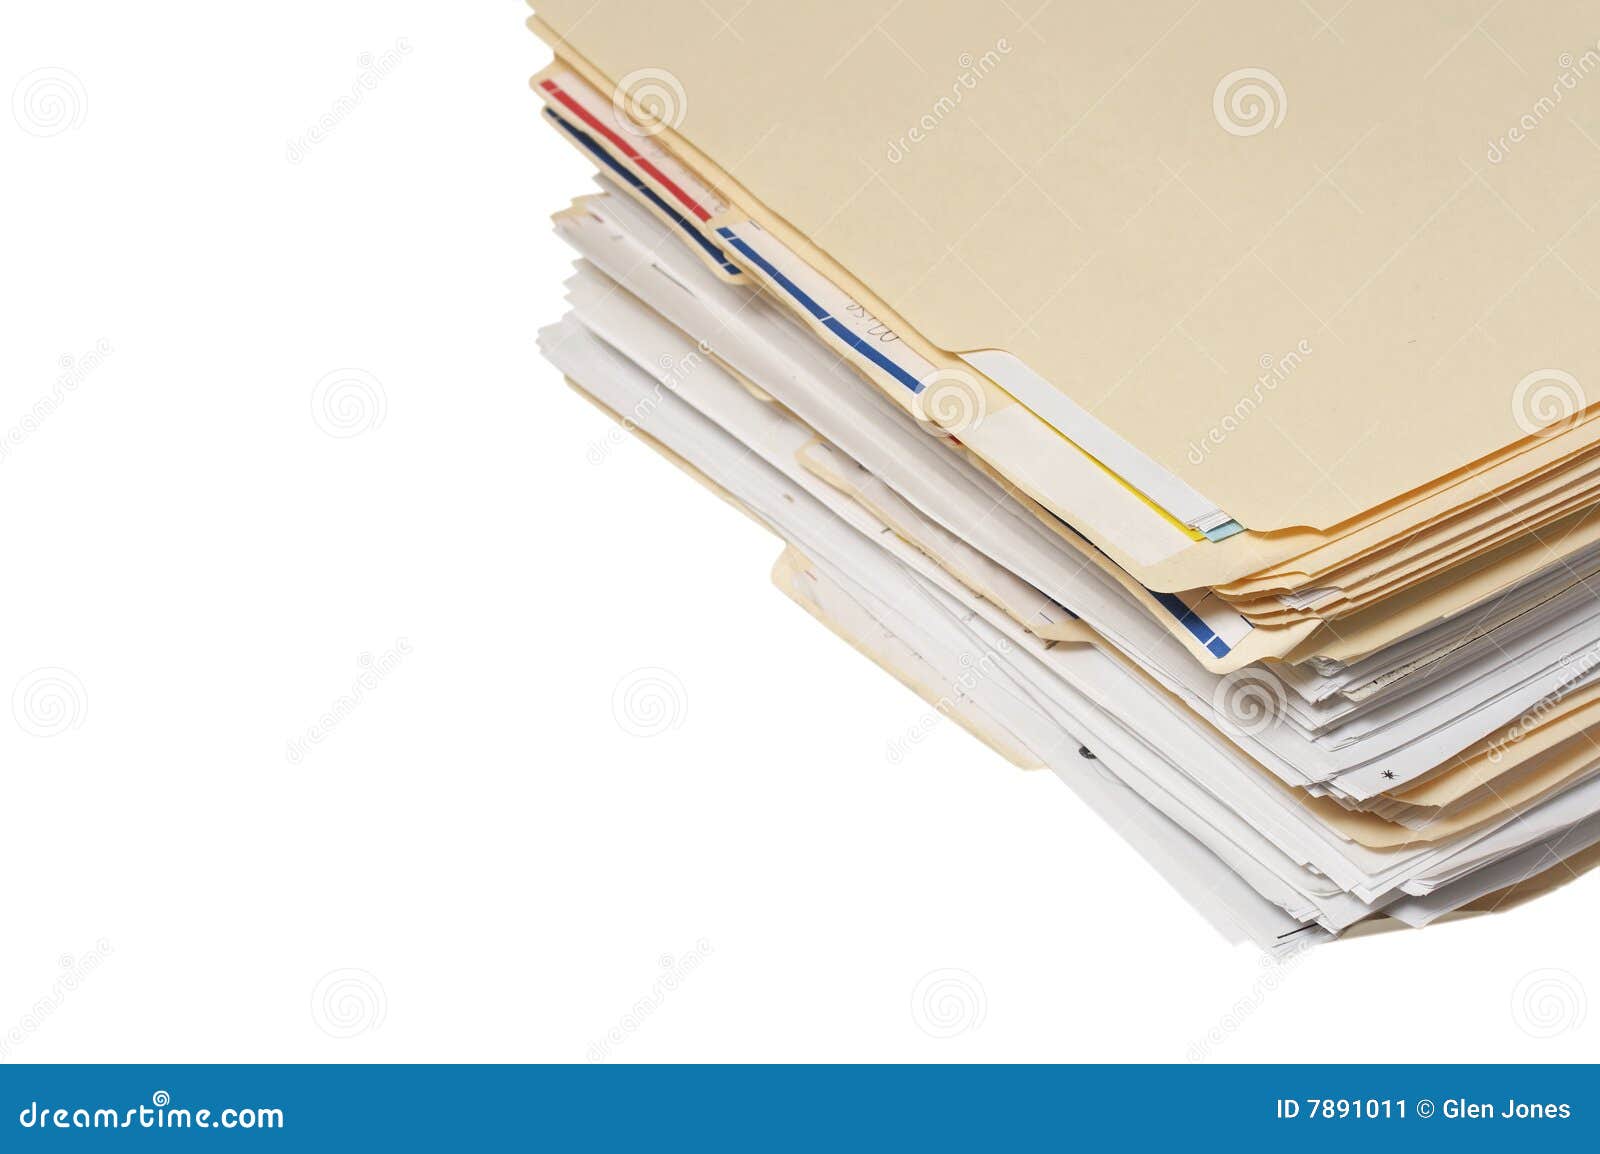 file stack